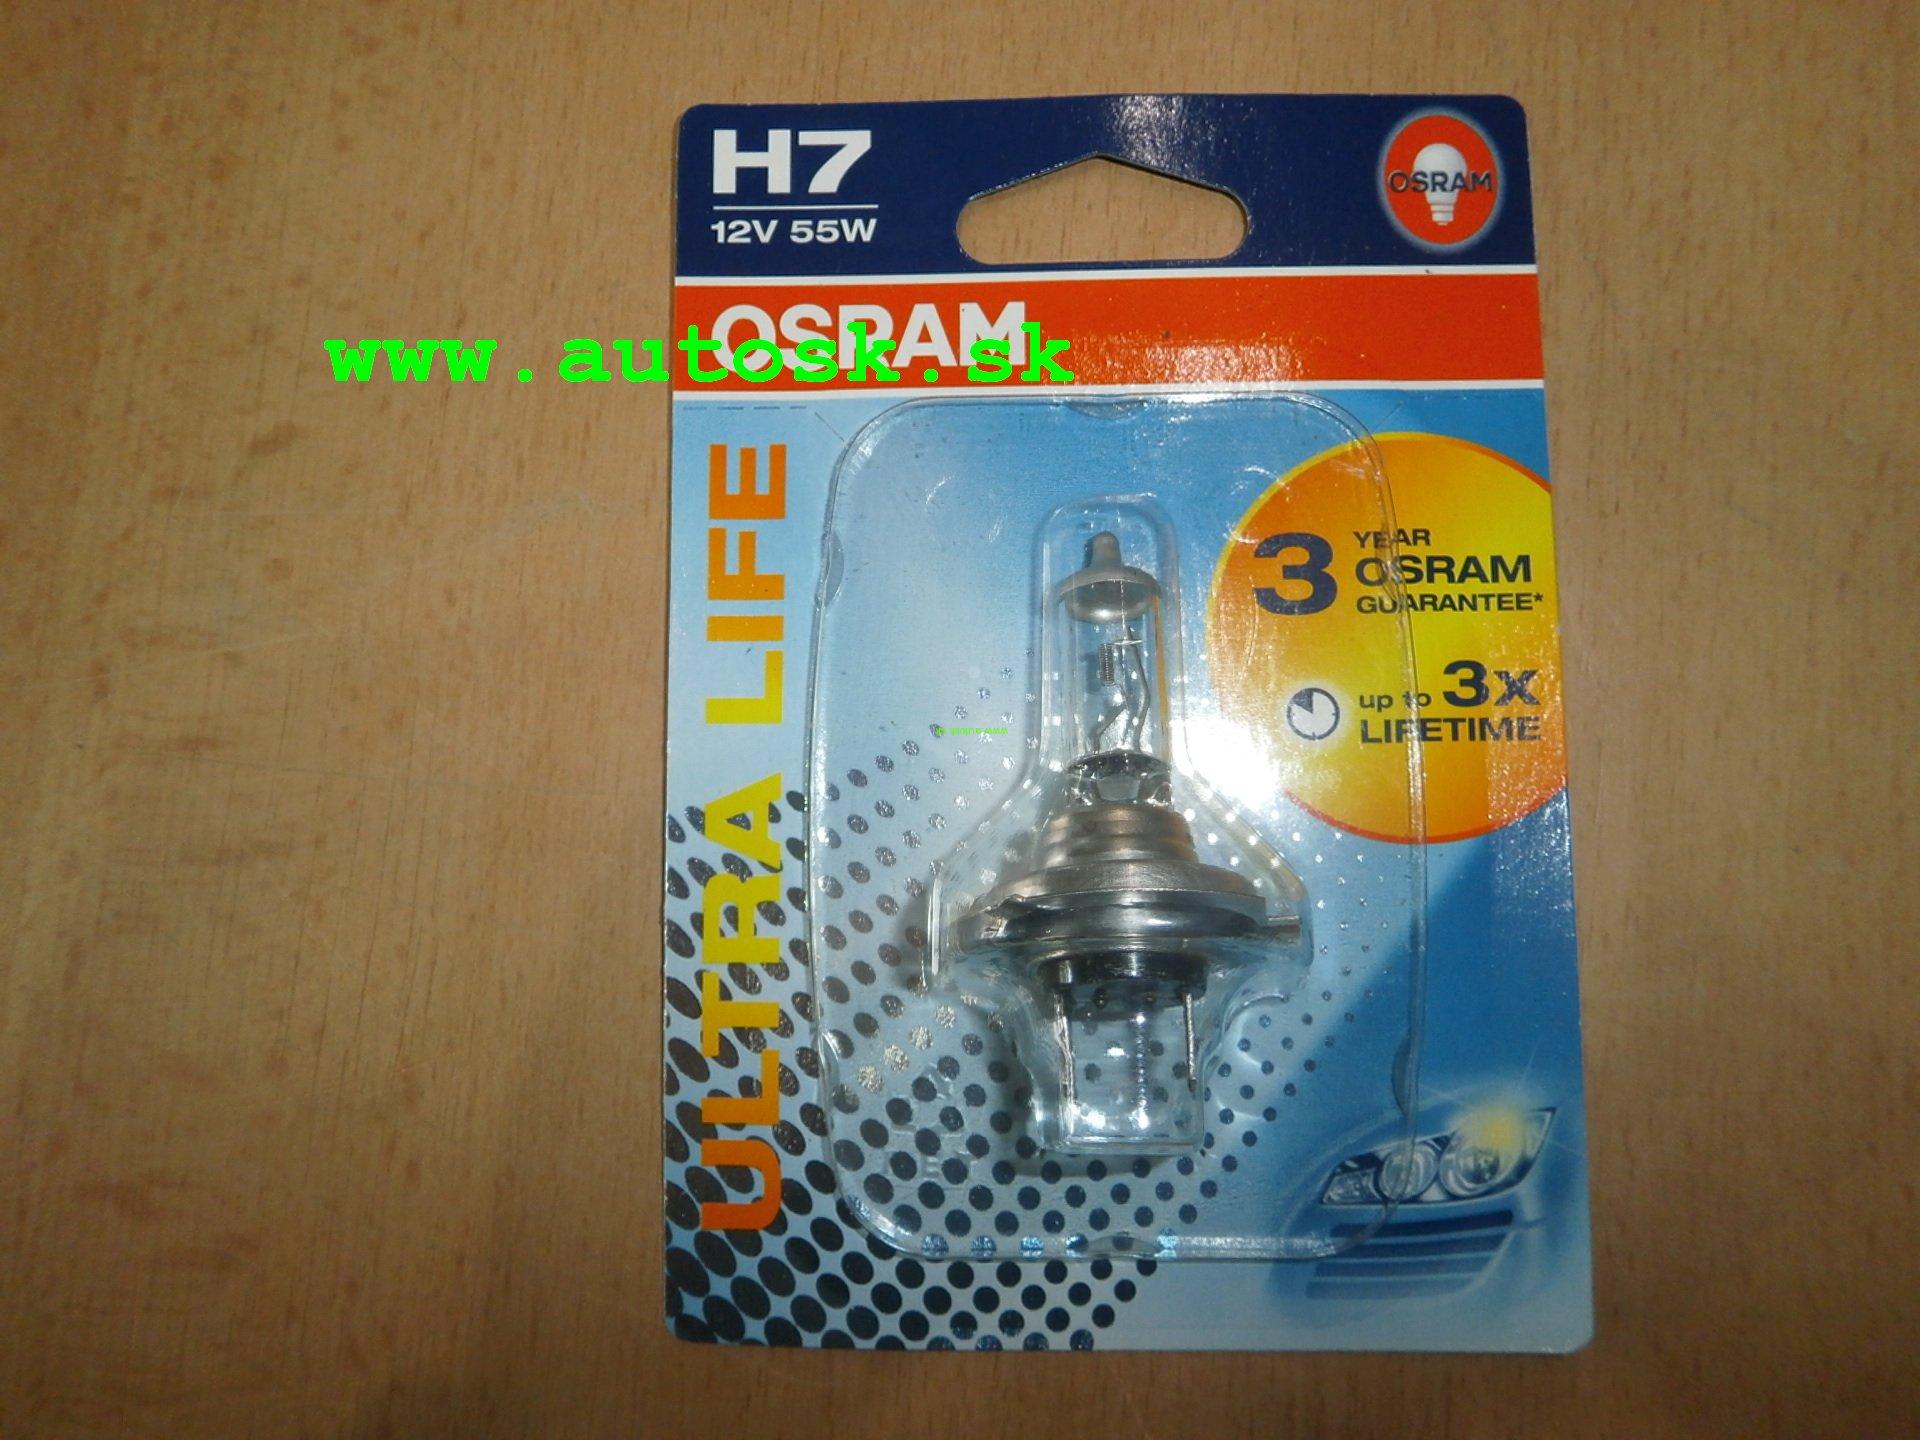 OSRAM Ultra Life H7 55W